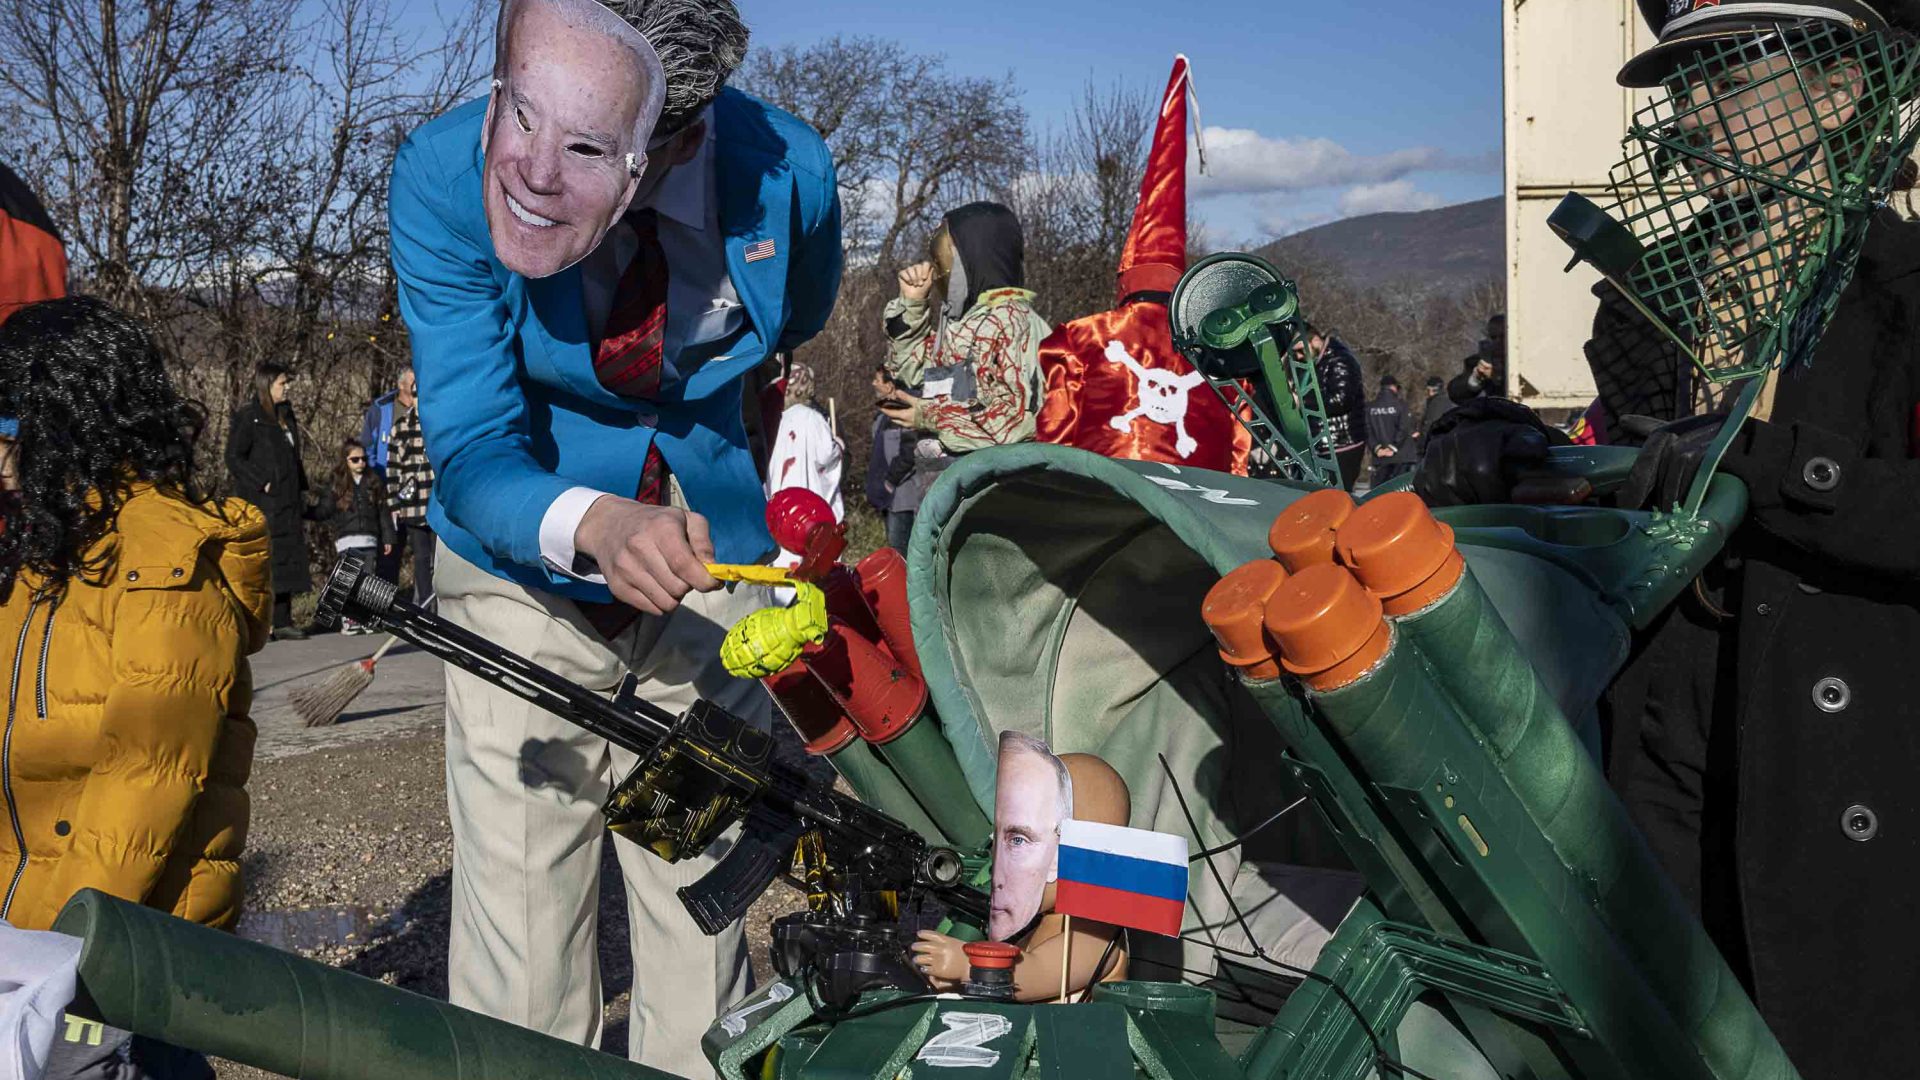 A man dressed as Joe Biden pushes a small Putin the his stroller.